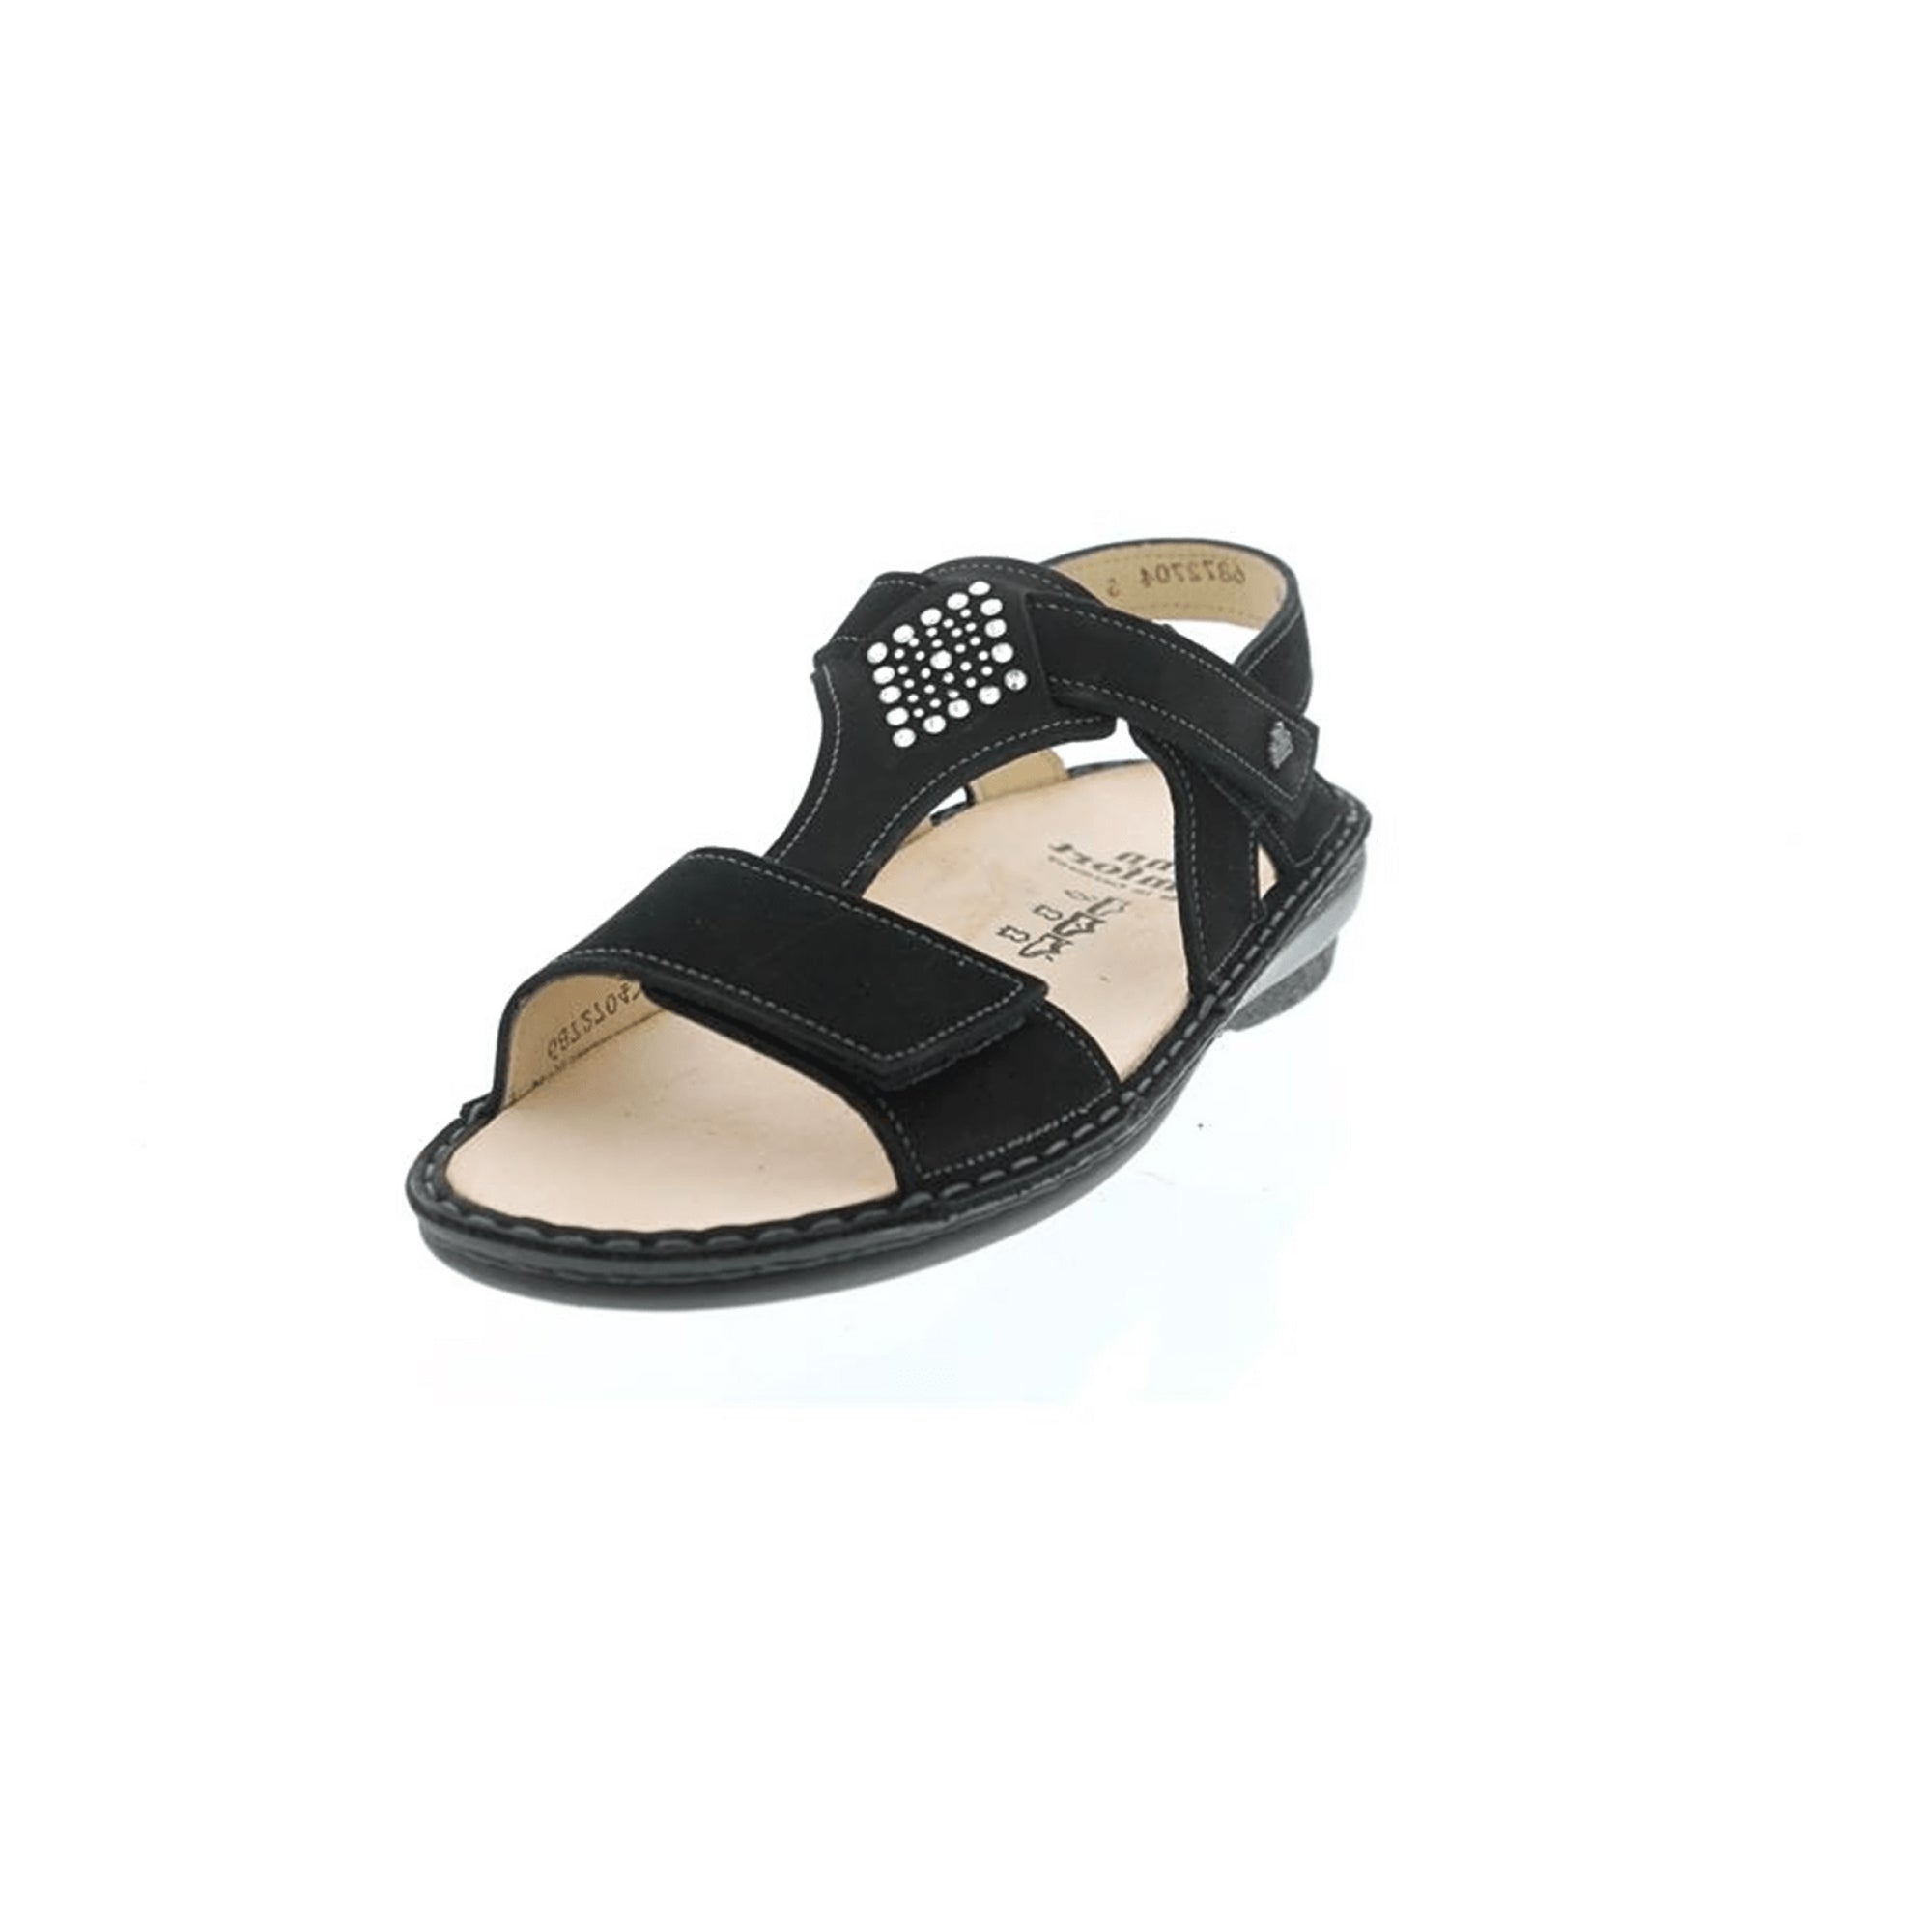 Finn Comfort Caleta Women's Comfortable Black Shoes - Stylish & Durable